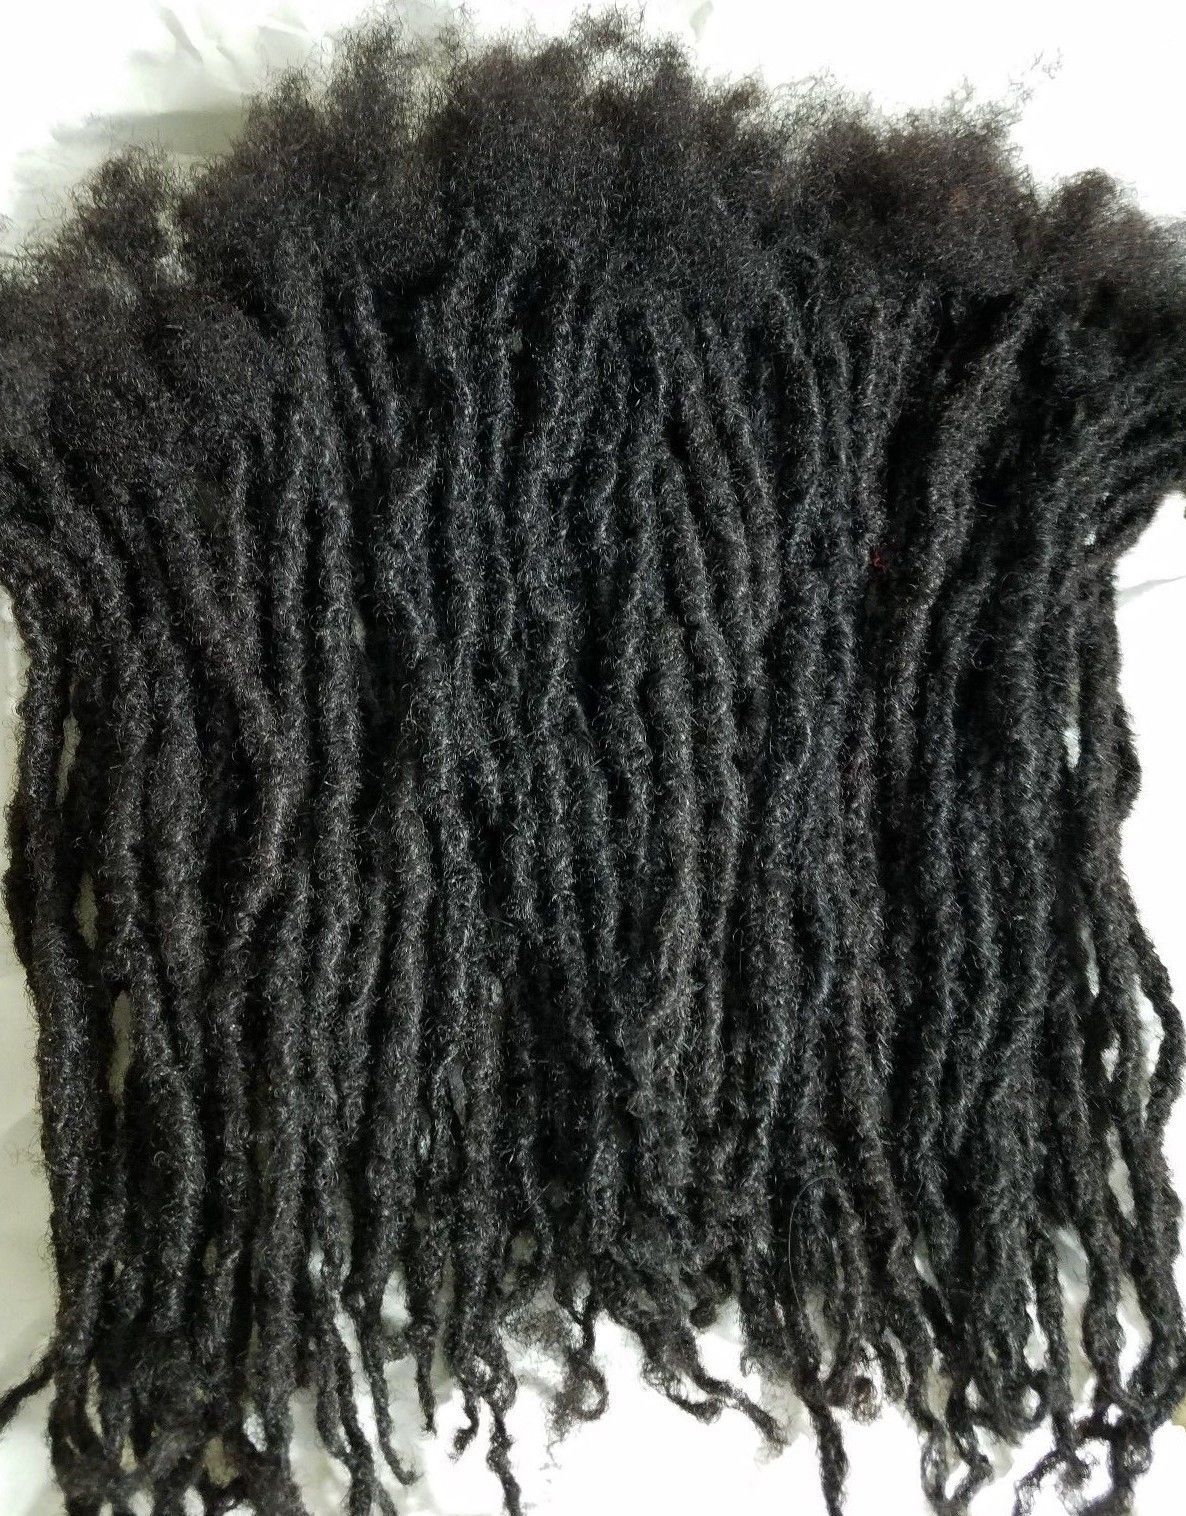 100% Nonprocess Human Hair handmade Dreadlocks 80 pieces  stretch 14'' black 1B - $420.00